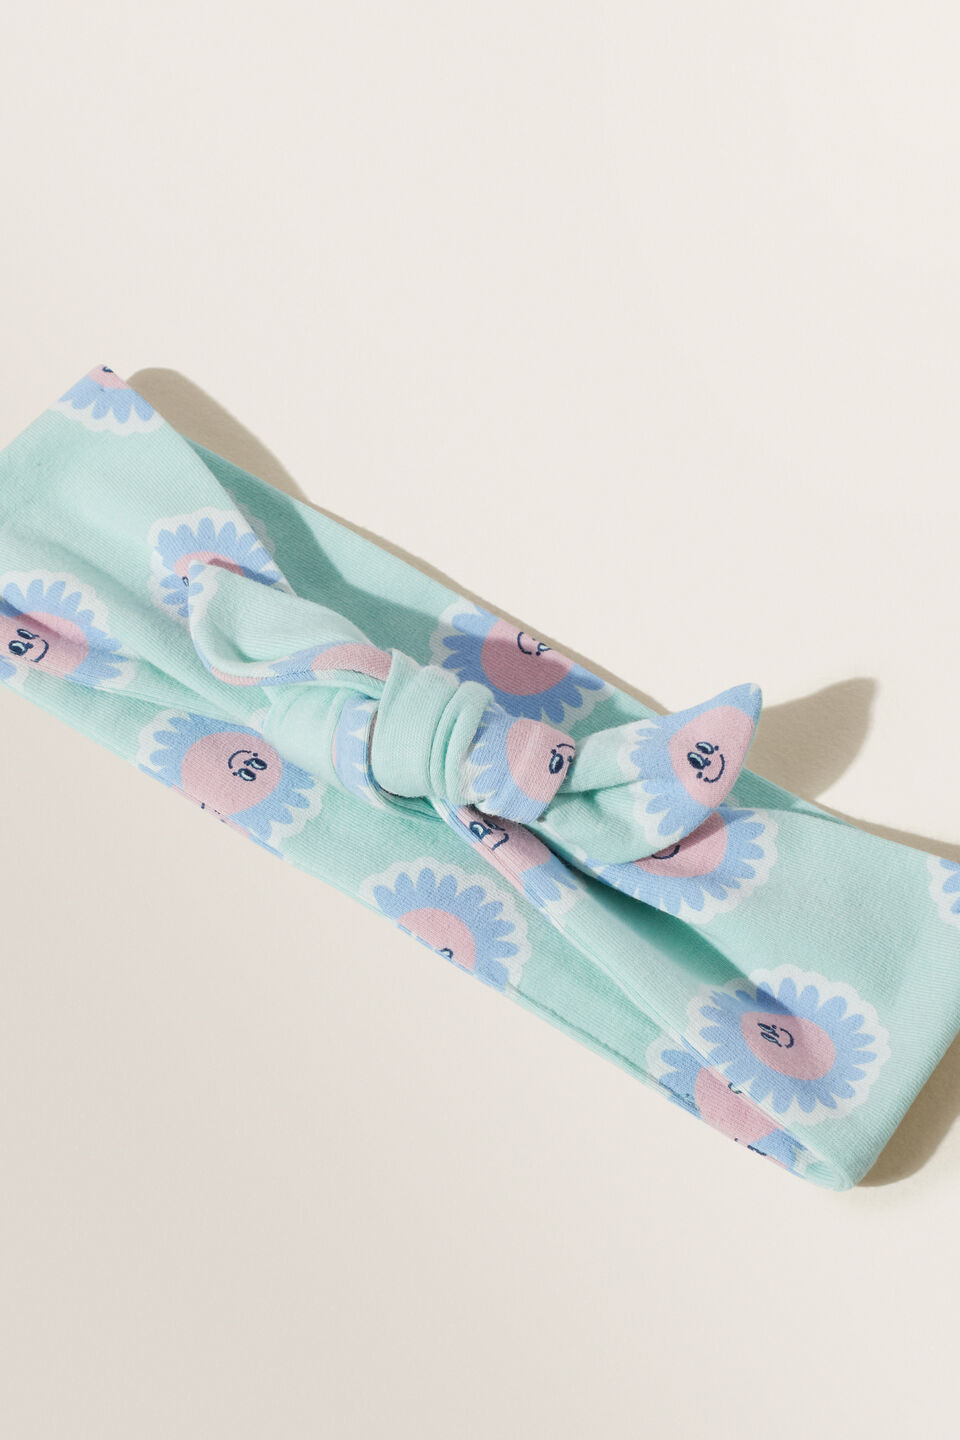 Flower Fabric Headband  Aqua Mint